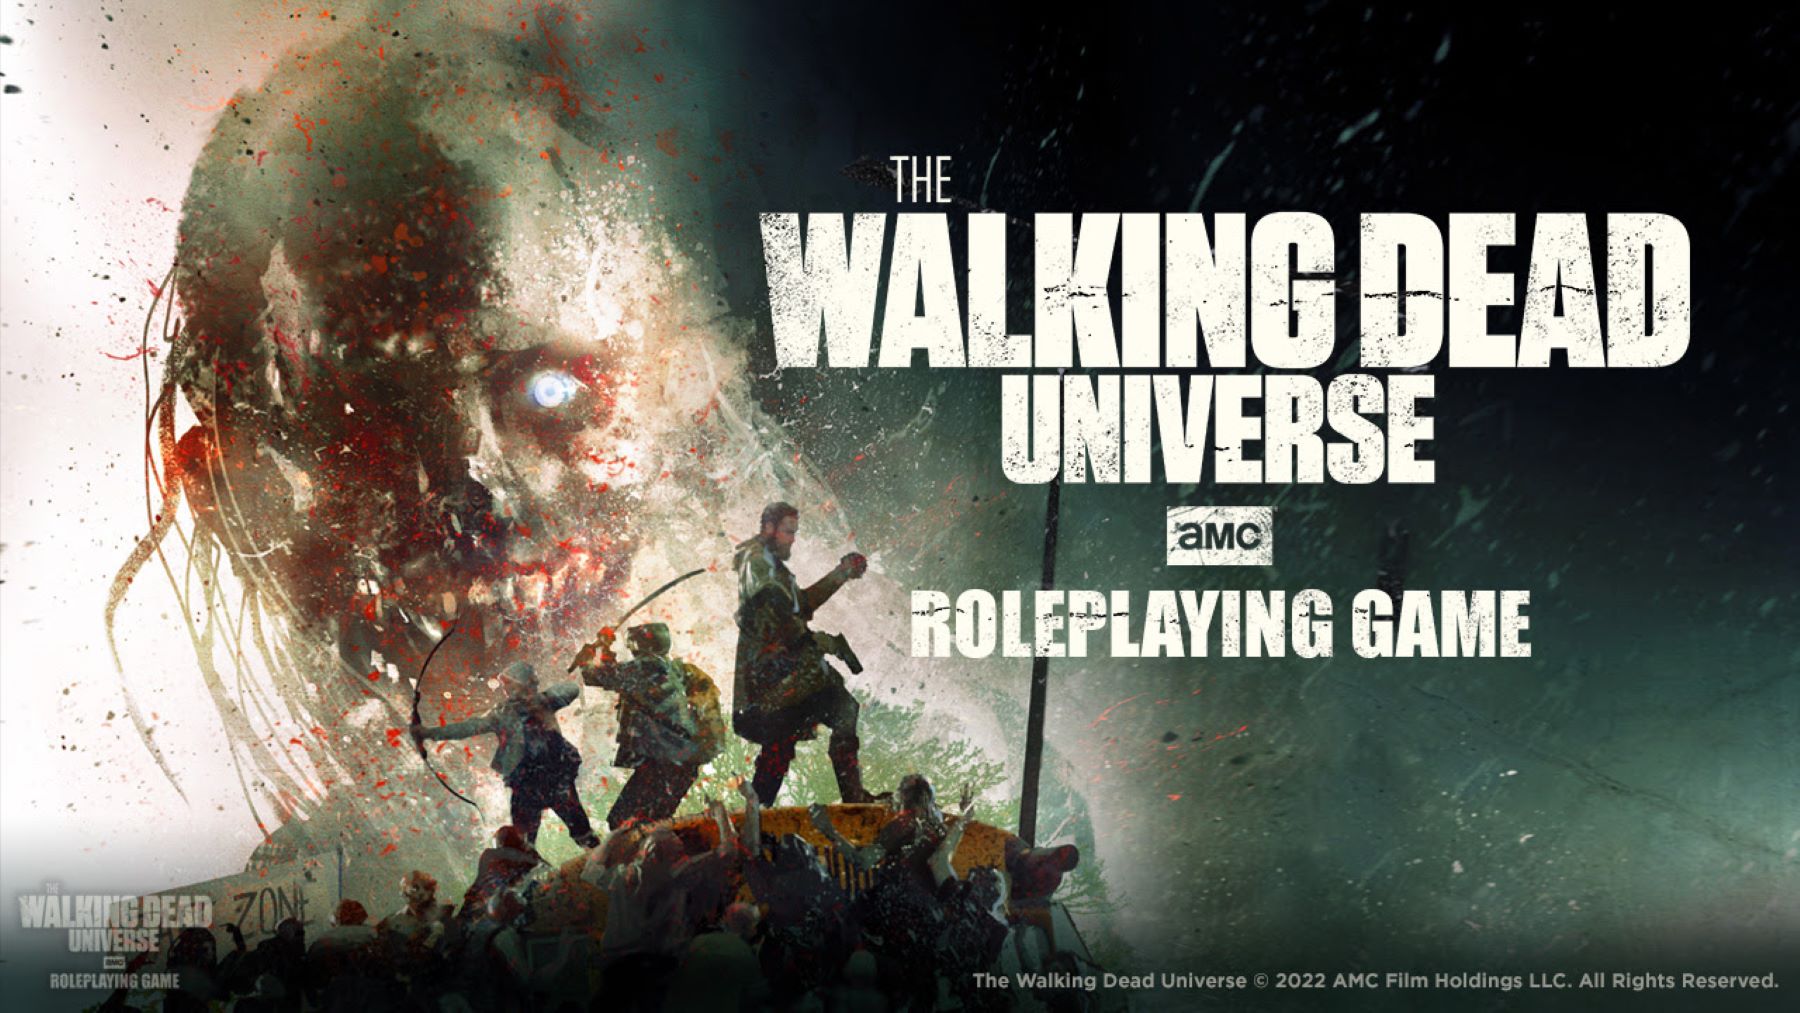 The Walking Dead Universe RPG on Kickstarter – 2 Days Left